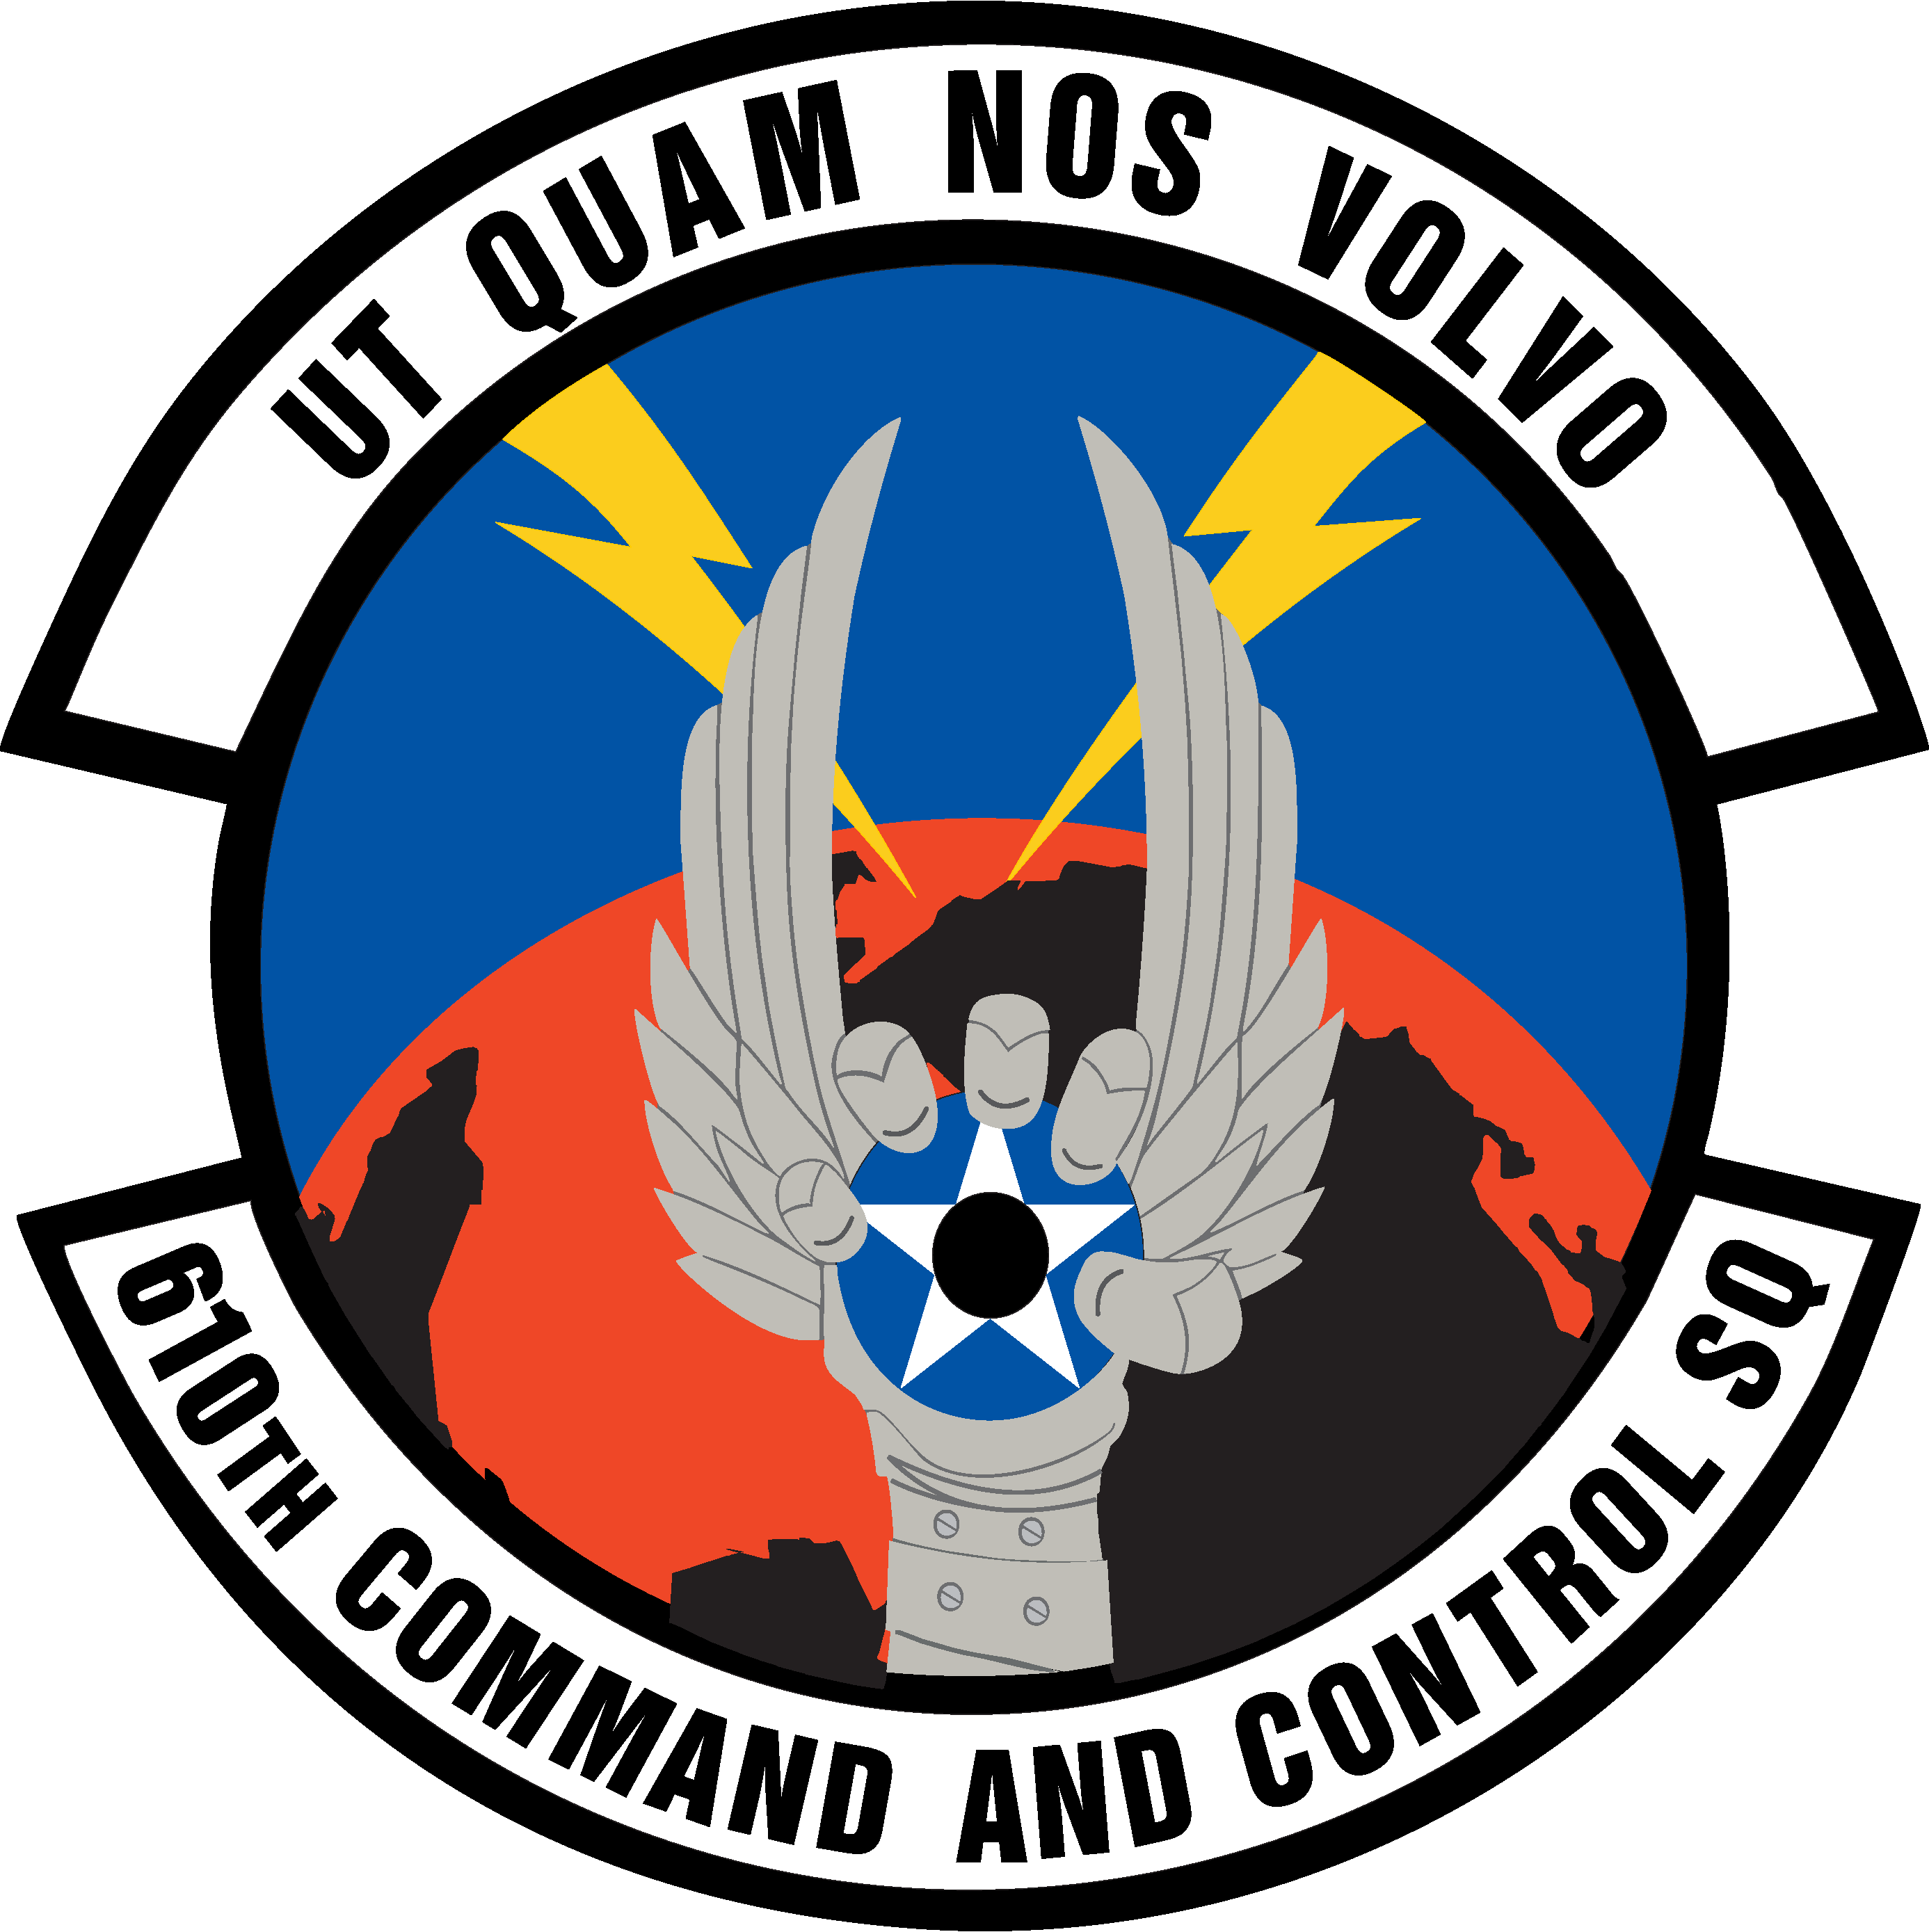 610th Command and Control Squadron Emblem